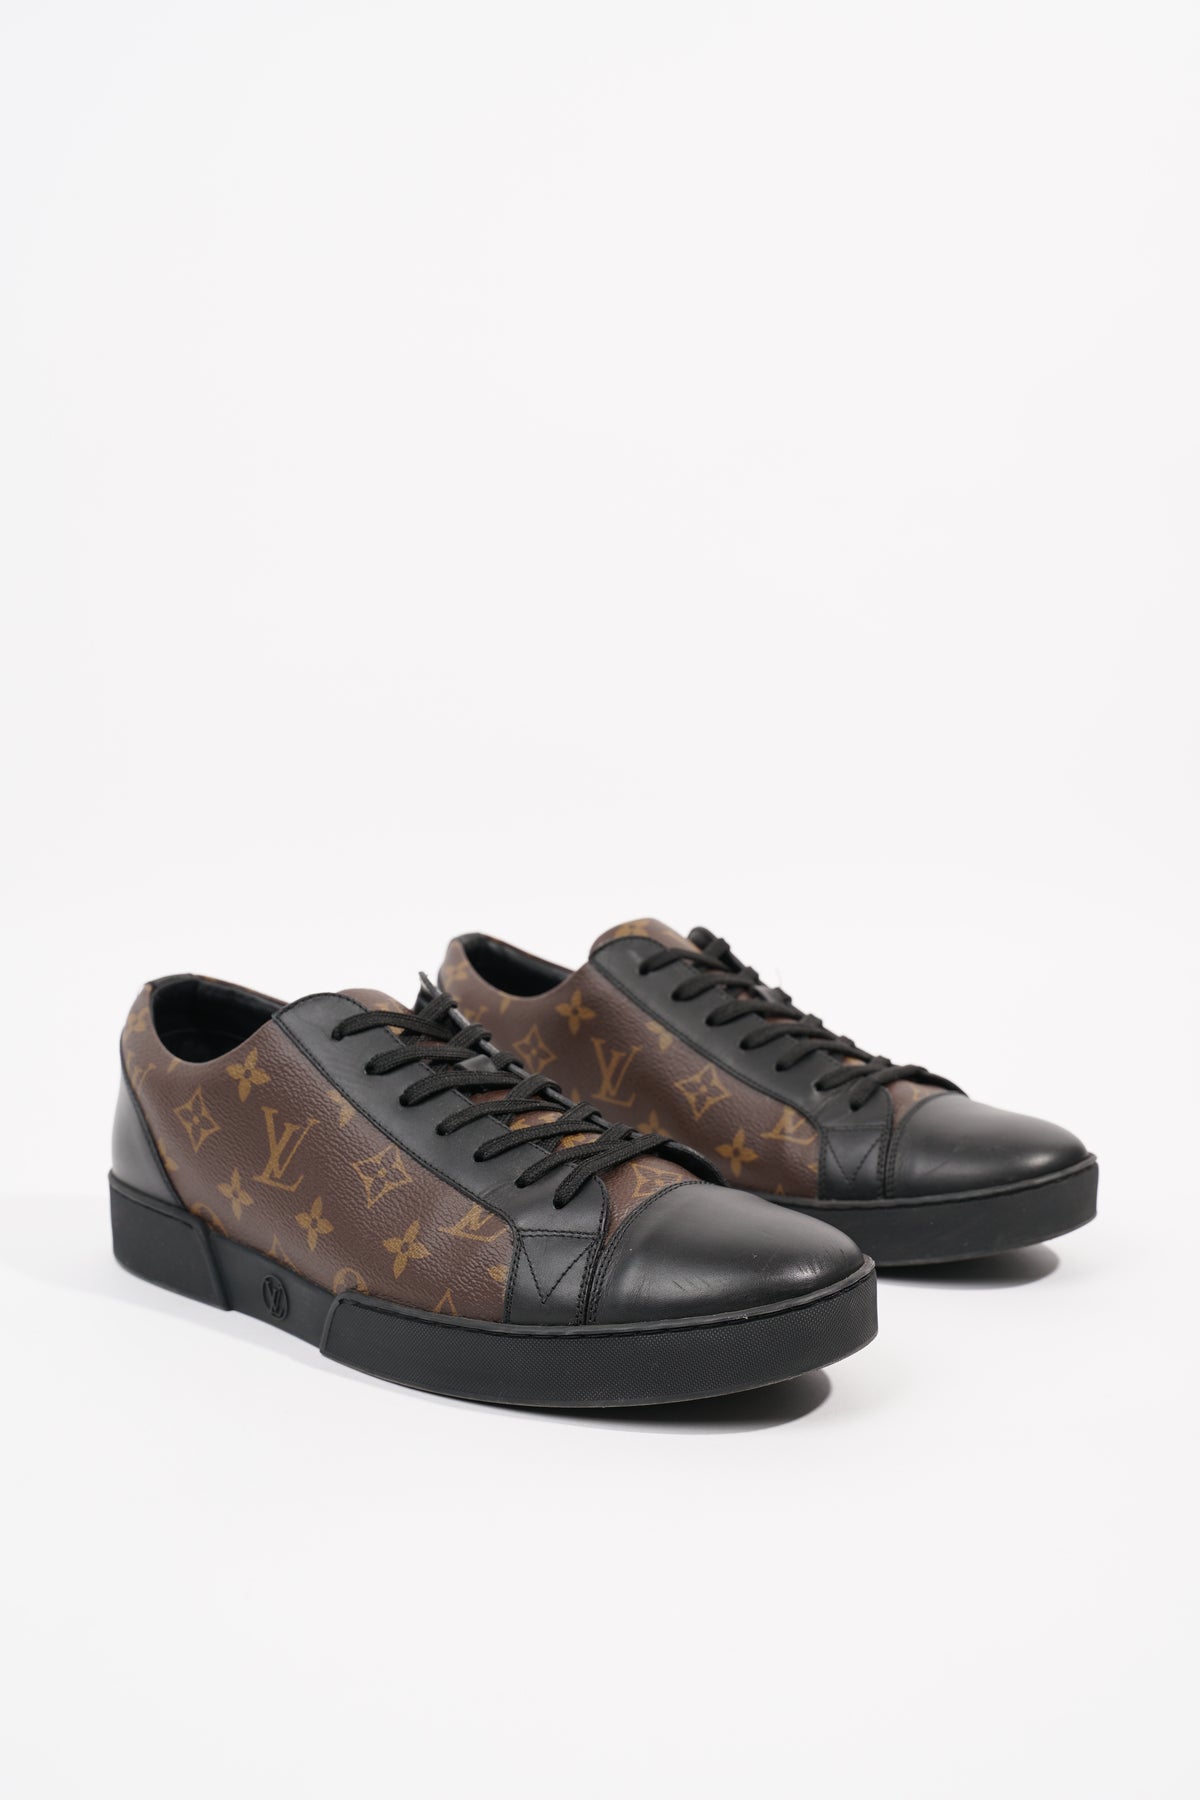 Louis Vuitton Match-up Sneaker Boot in Black for Men